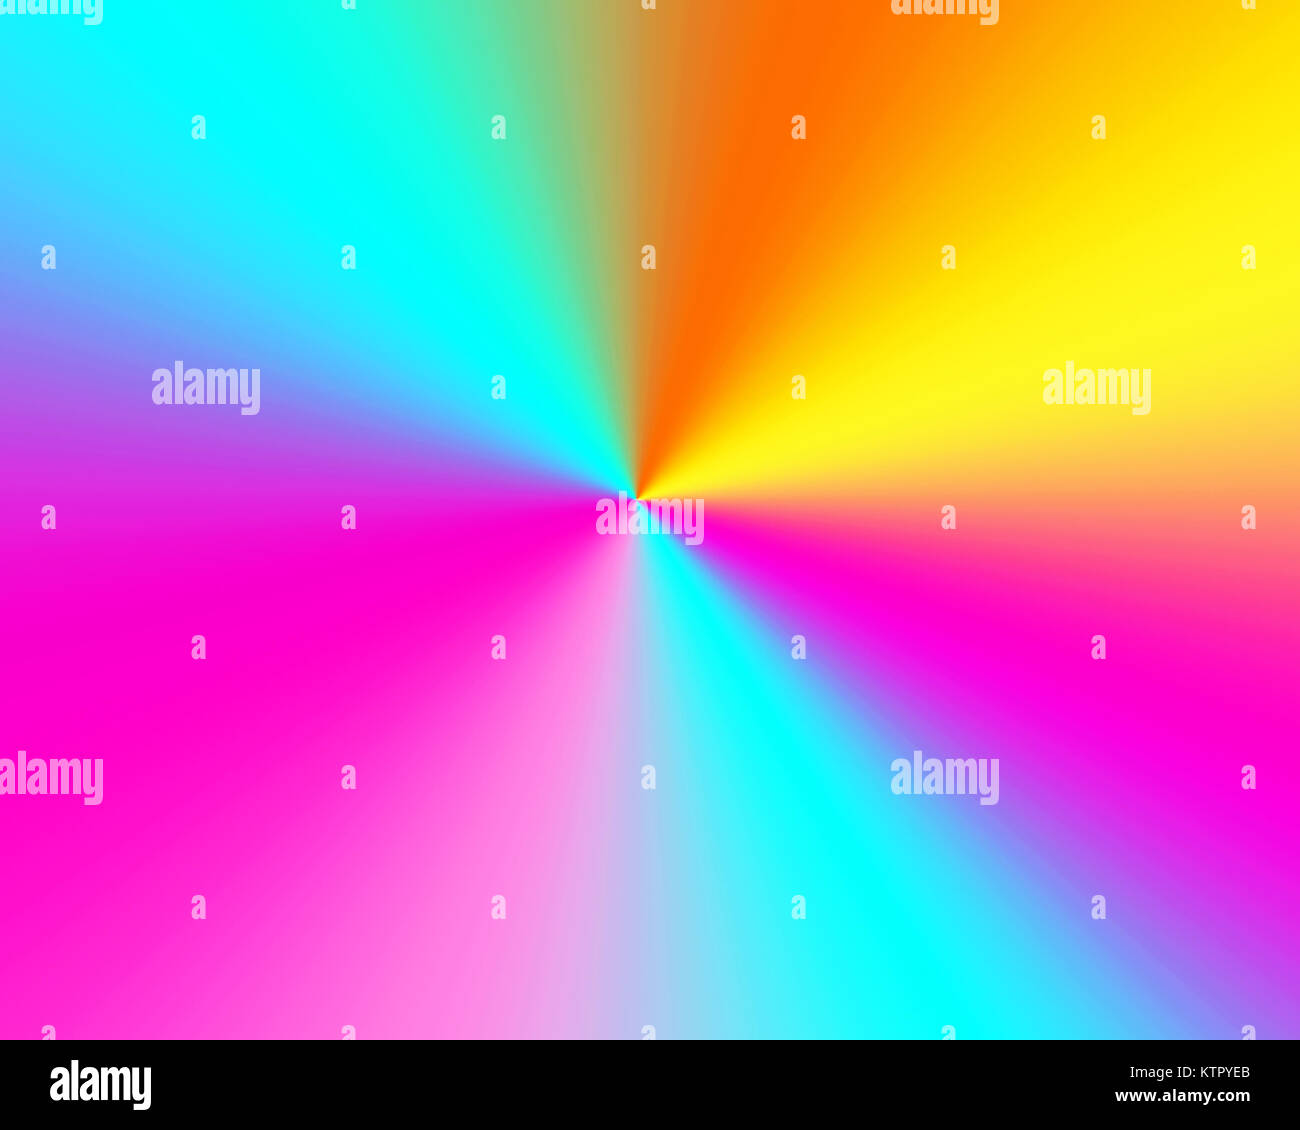 https://c8.alamy.com/compes/ktpyeb/protector-de-pantalla-de-fondo-de-vibrantes-colores-del-arco-iris-ktpyeb.jpg